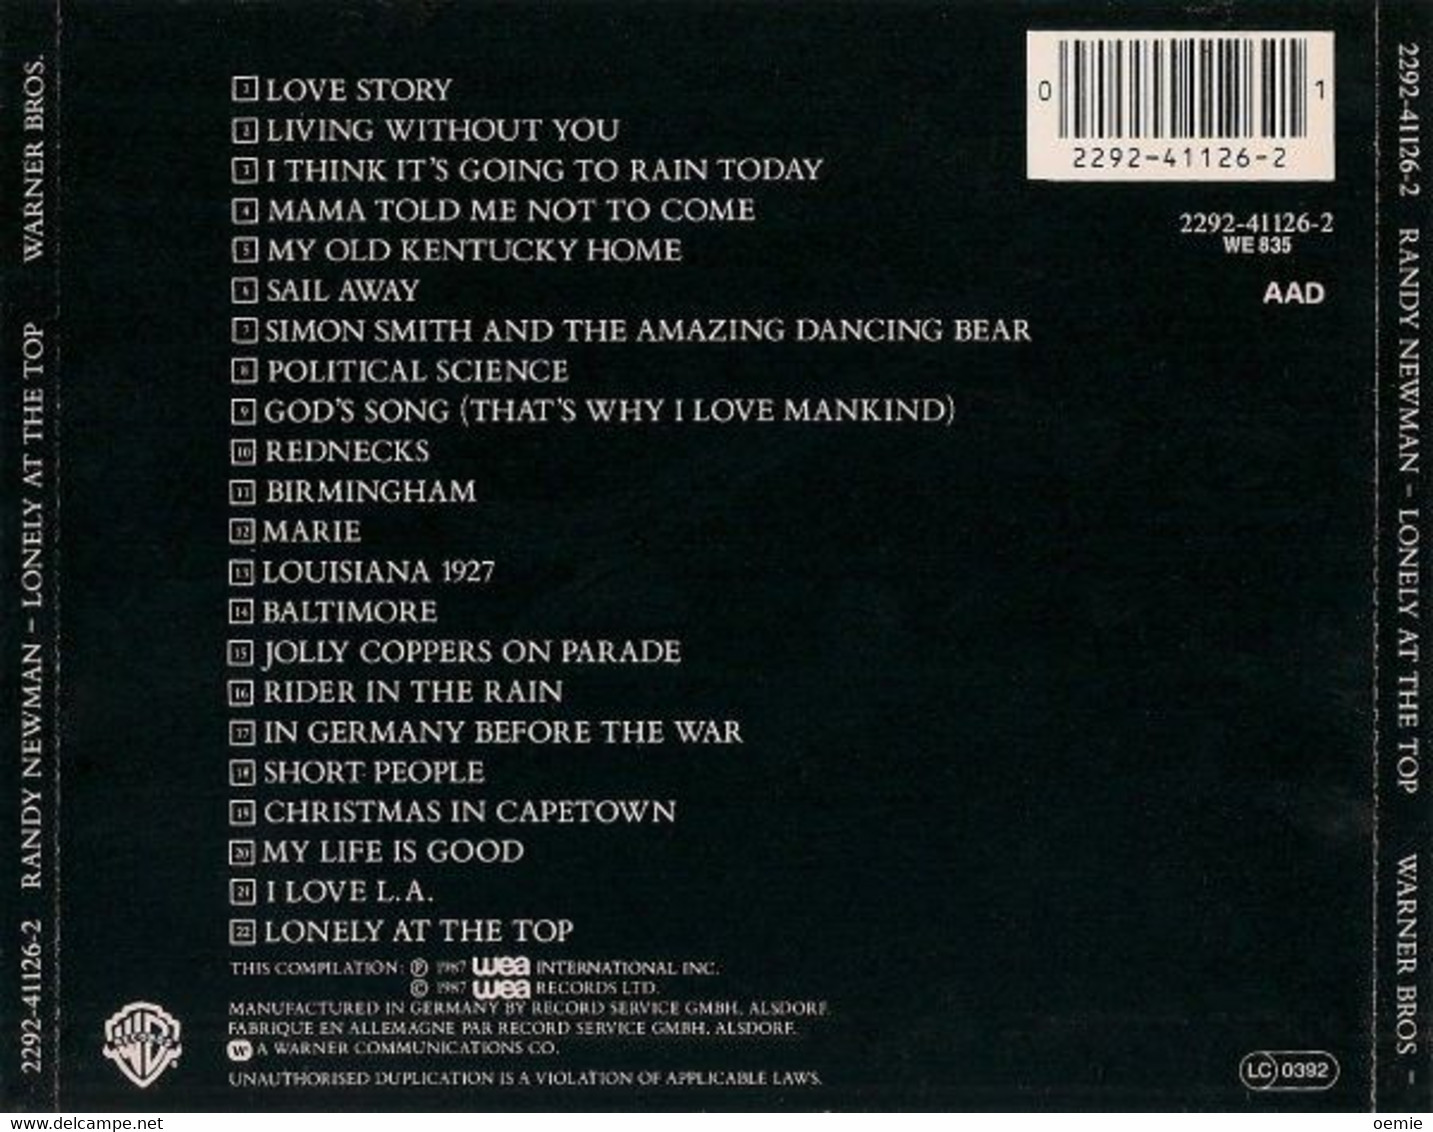 RANDY  NEWMAN °° LE  BEST  OF   LONELY  AT  THE  TOP  //  CD ALBUM  22 TITRES NEUF SOUS CELLOPHANE - Klassik